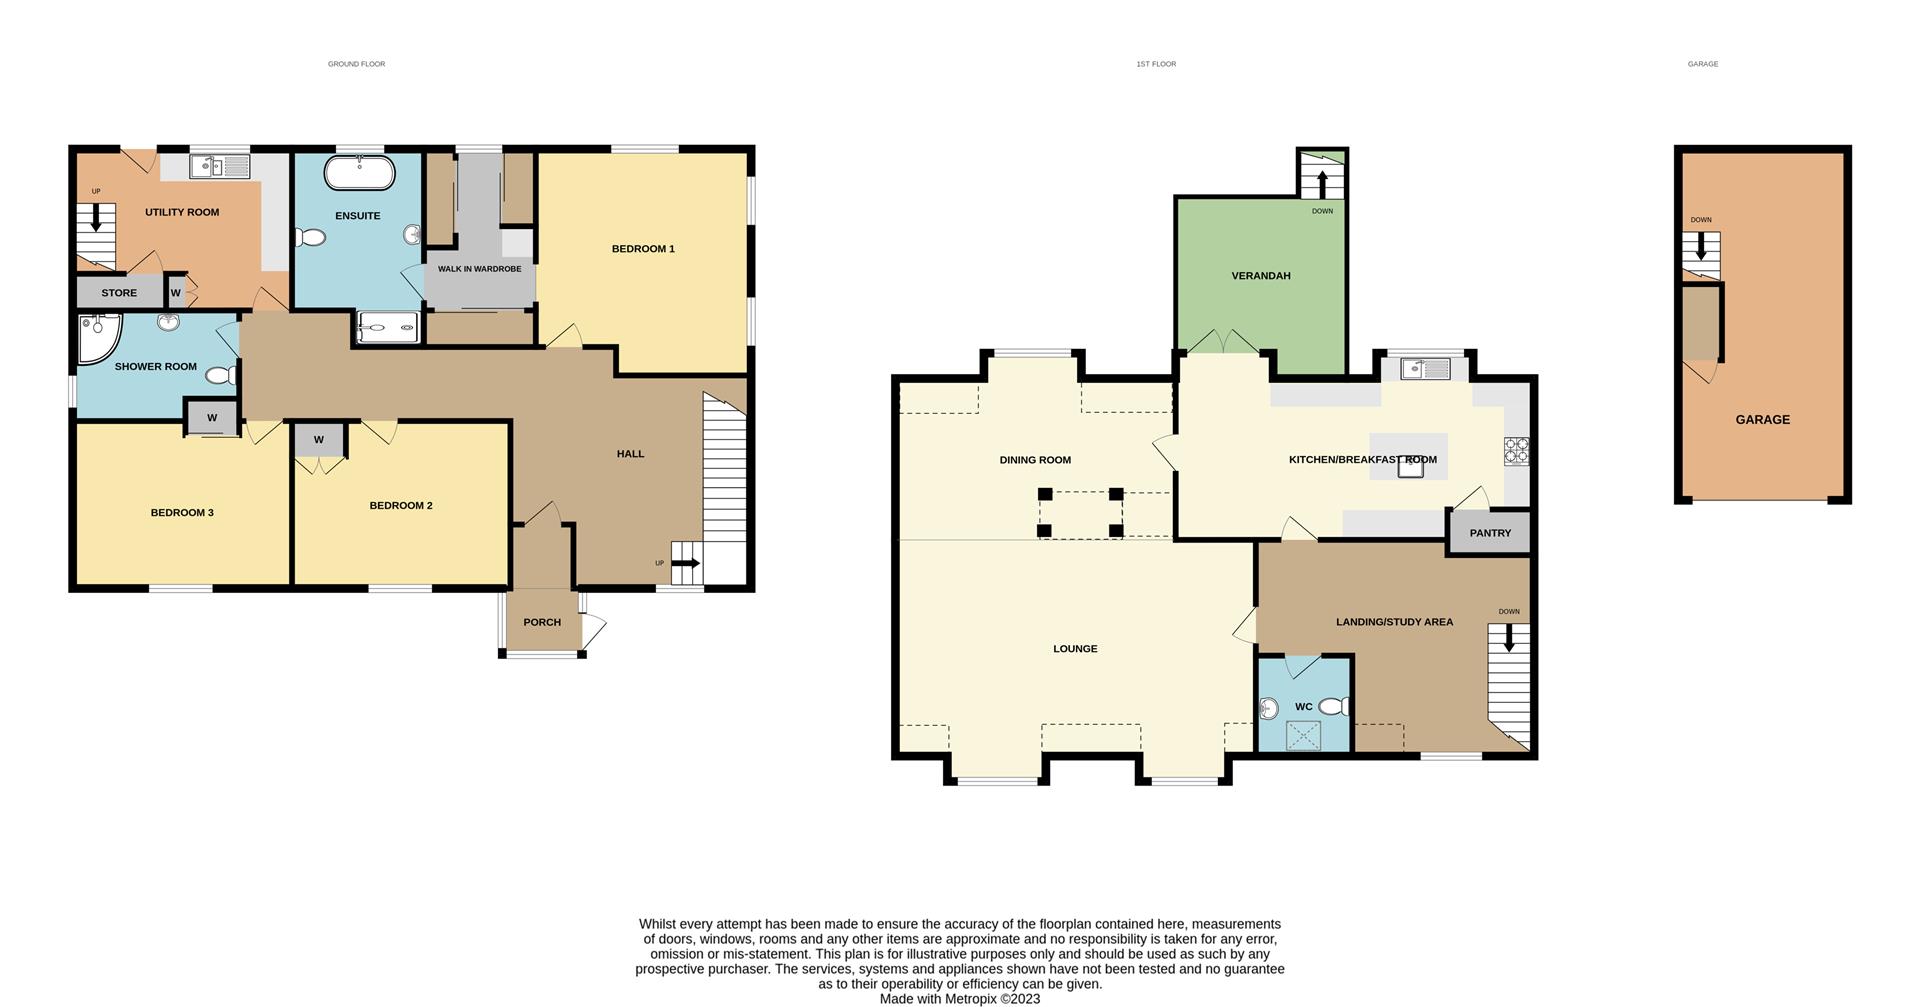 3 bed detached house for sale - Property floorplan